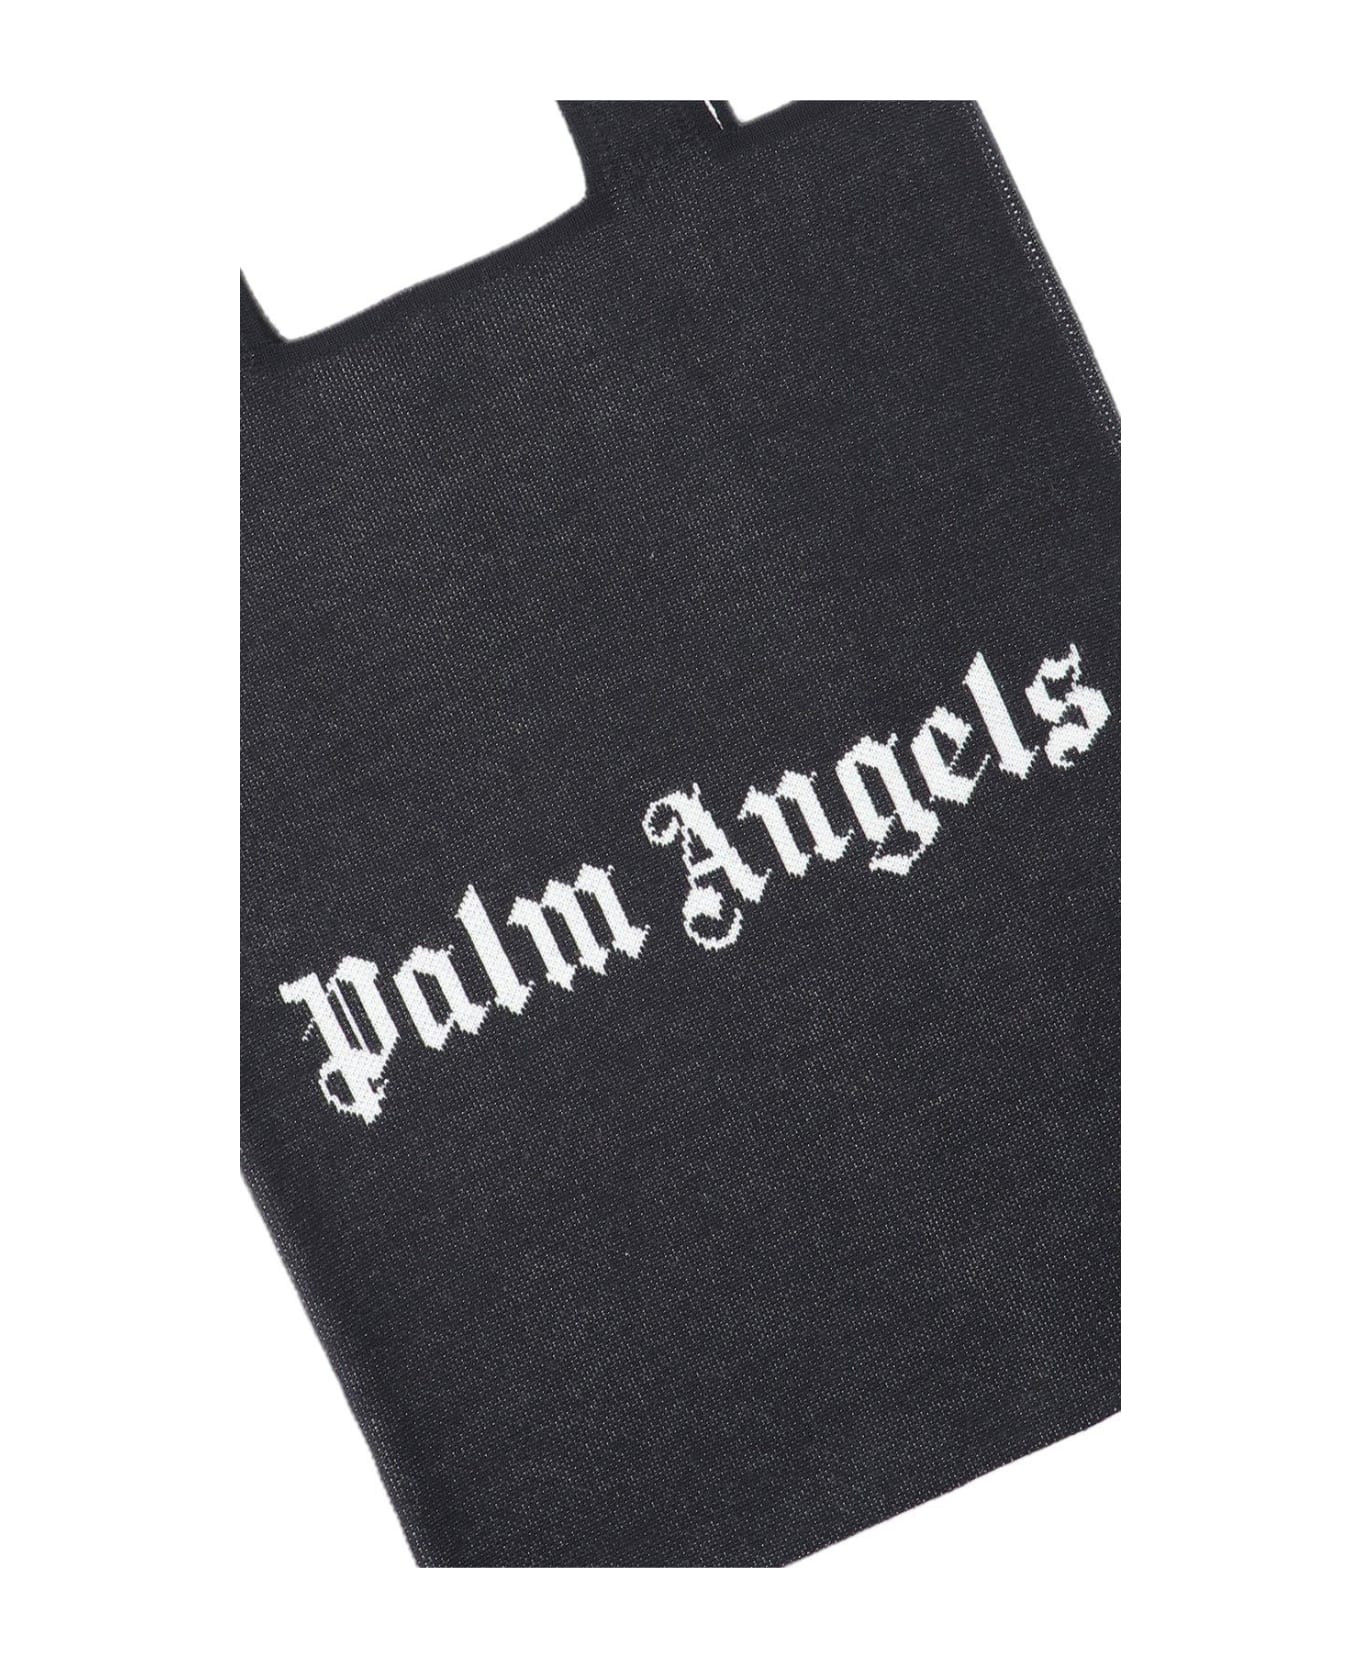 Palm Angels Logo Printed Tote Bag - Black